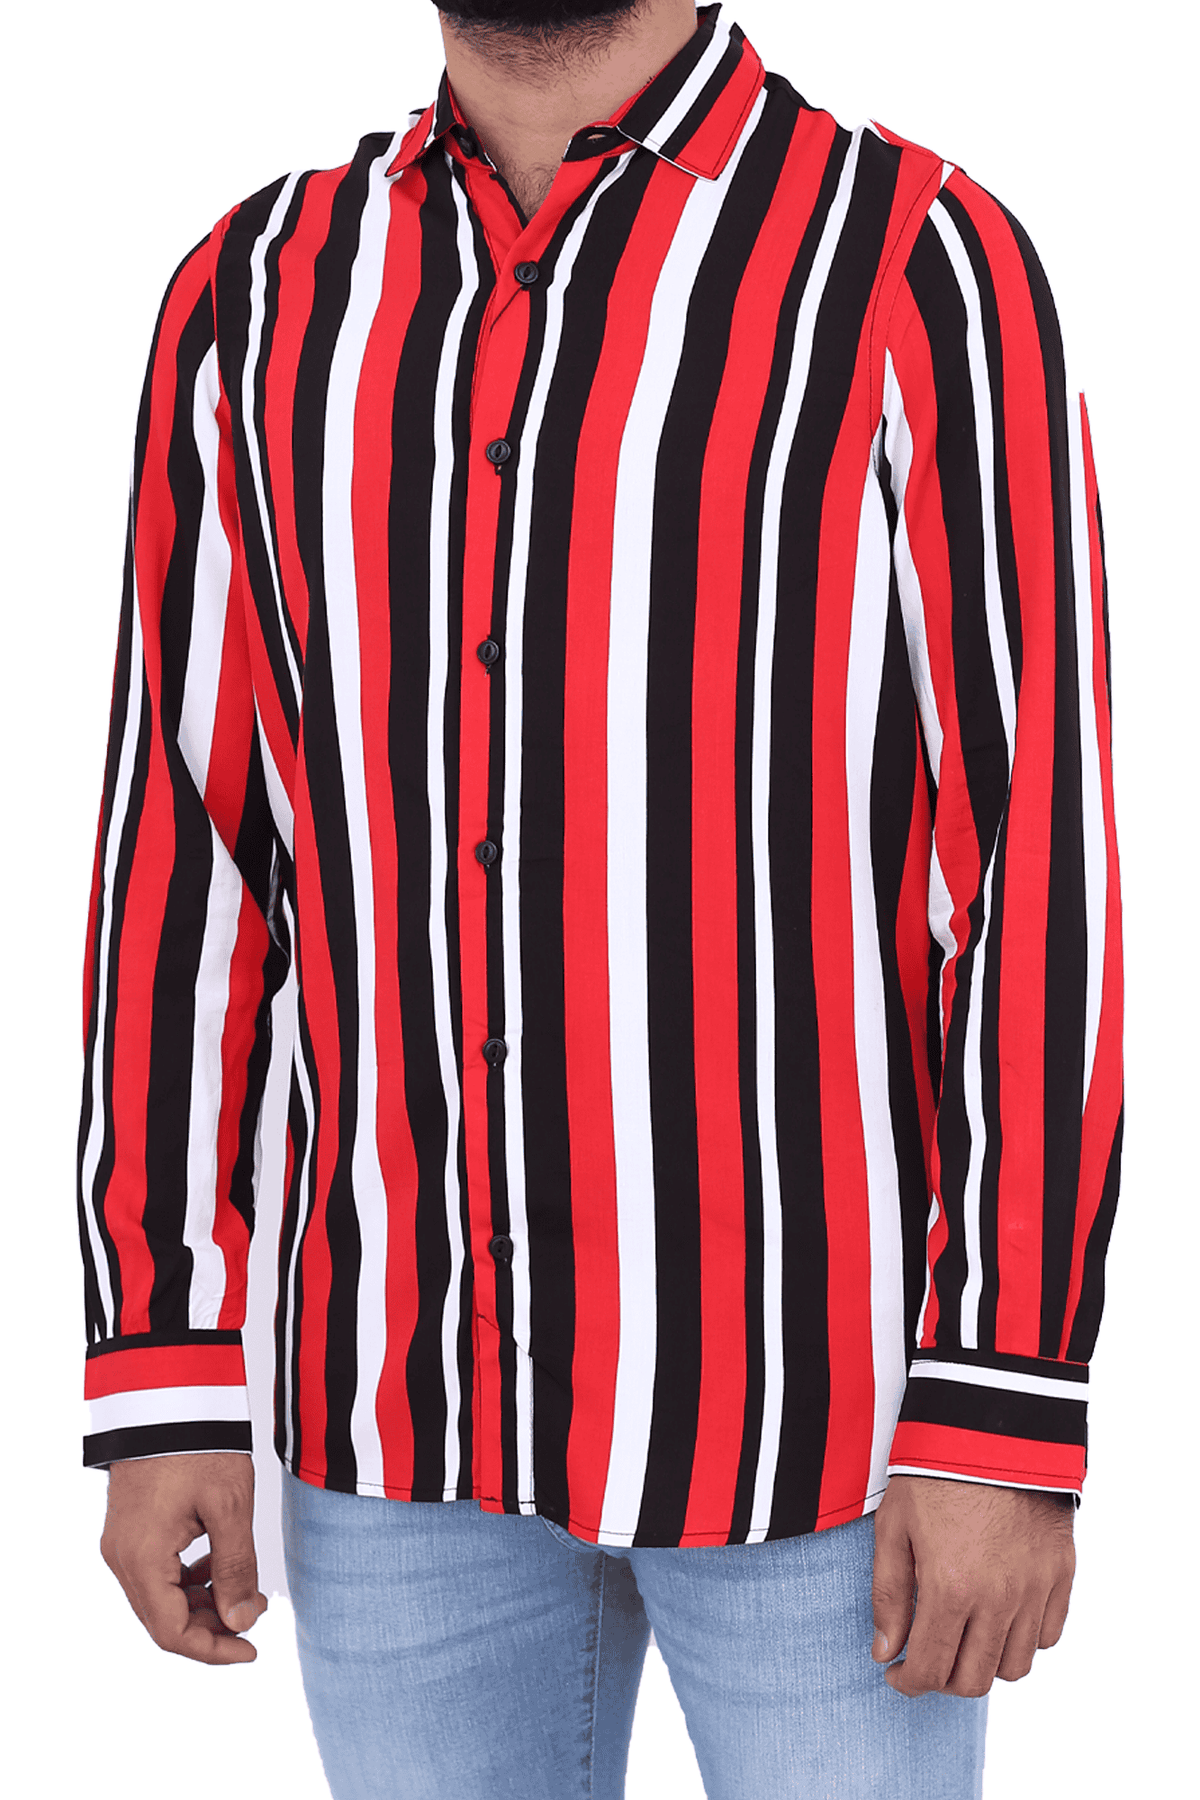 Men's Casual Shirt SHC-1742 Red Stripe